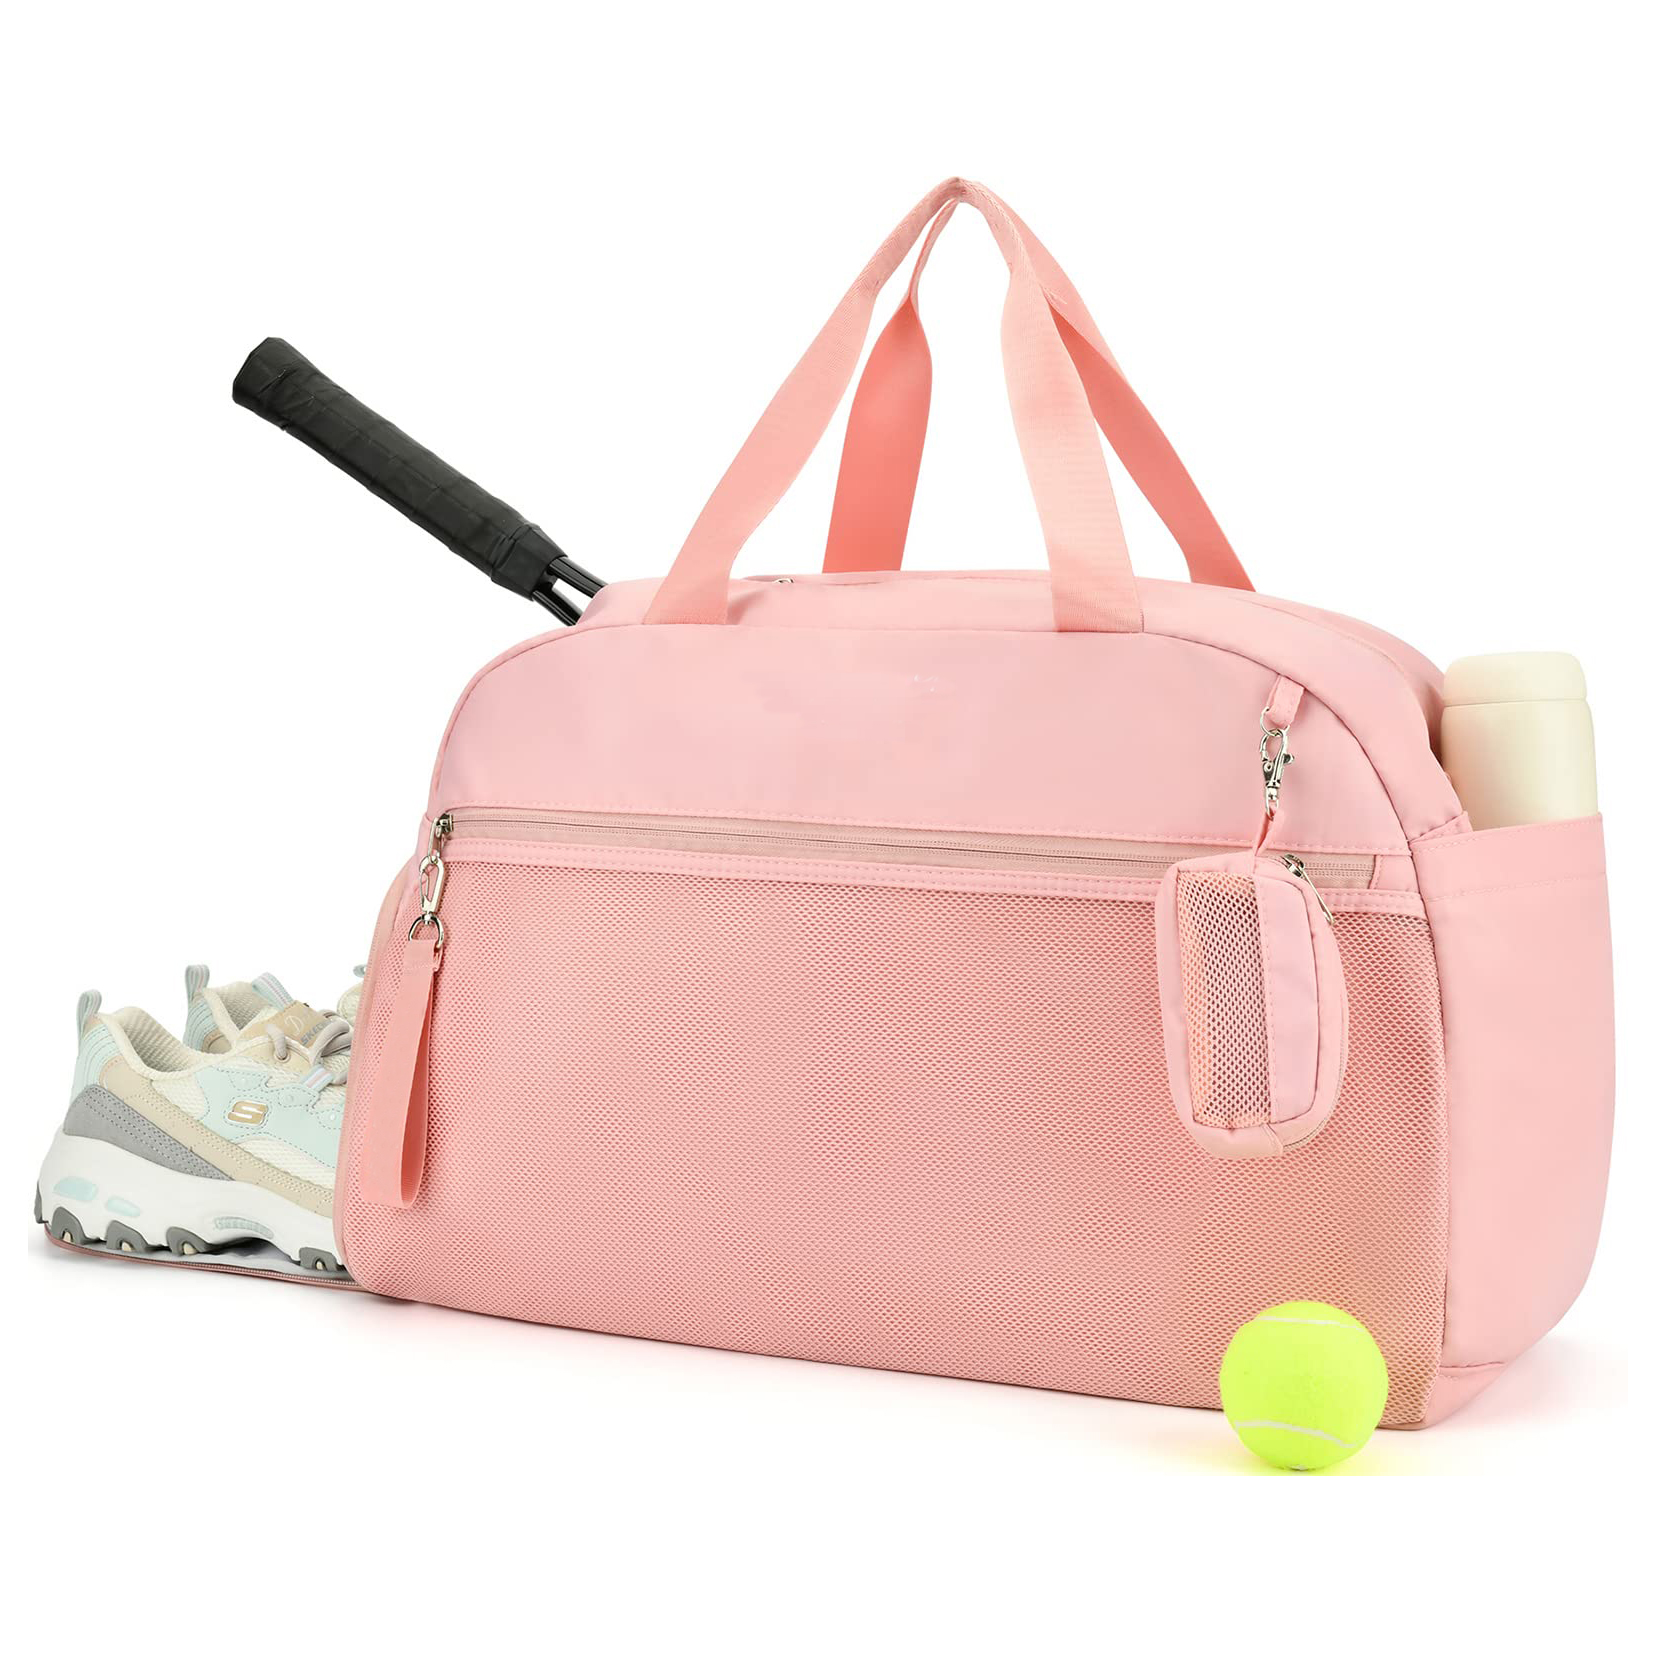 Tennis Duffle Bag - Golf Bag,Sports Bag,Diaper Bag Manufacturer ...